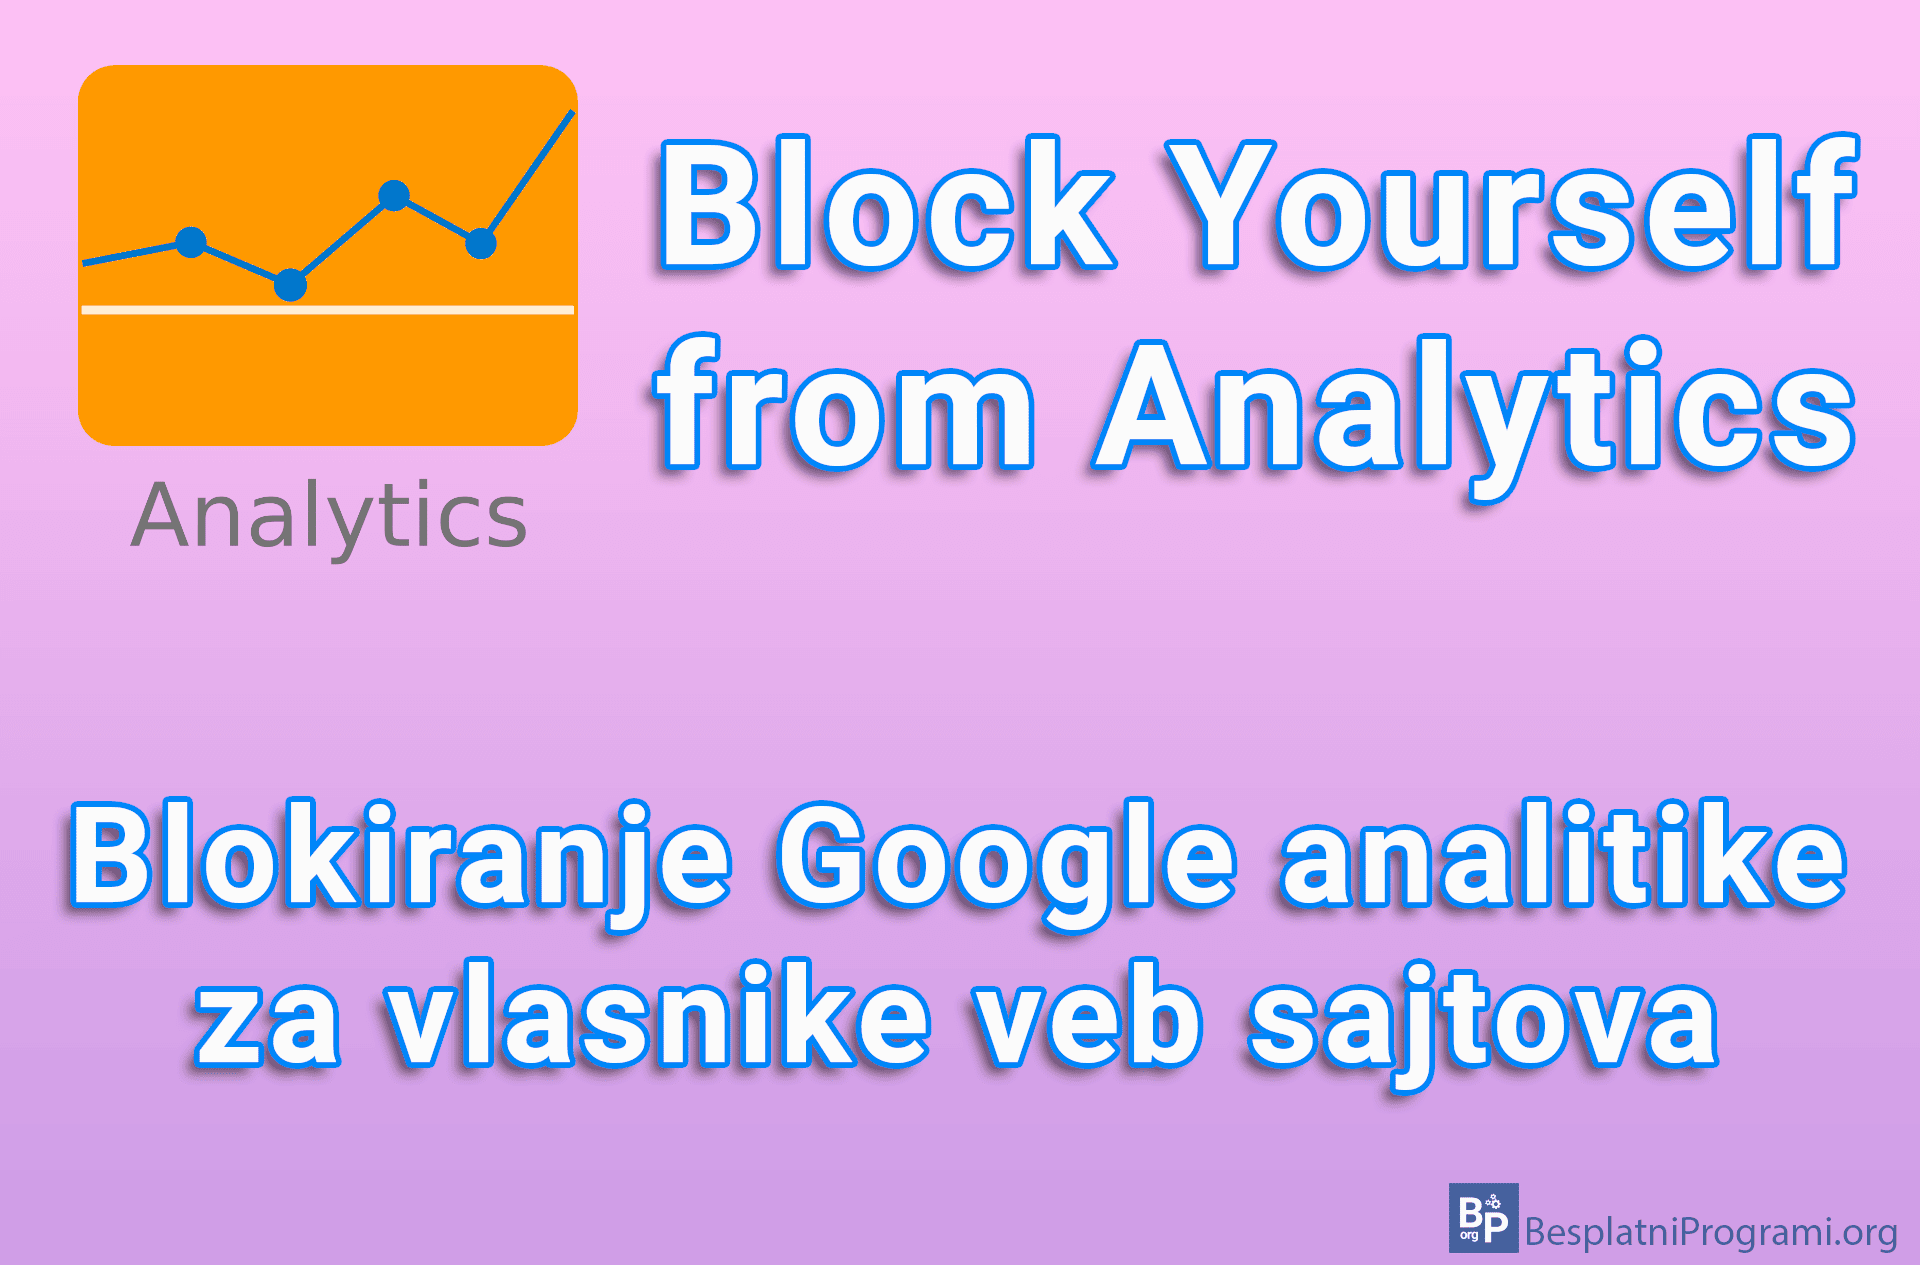 Block Yourself from Analytics – Blokiranje Google analitike za vlasnike veb sajtova